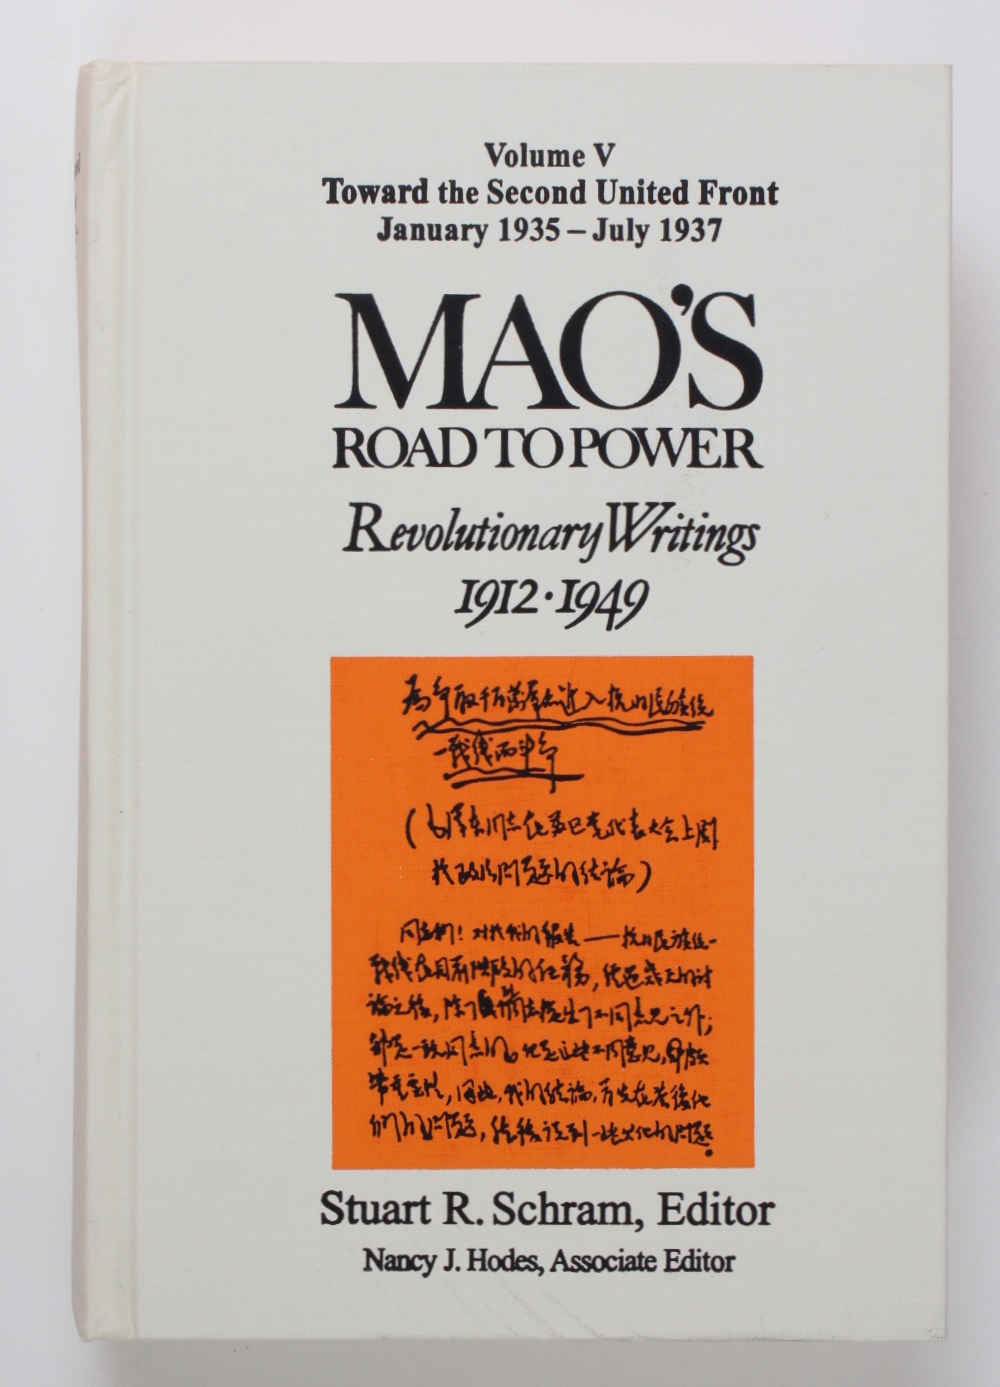 Mao's Road to Power: Revolutionary Writings, 1912-49. Vol. 5: Toward the Second United Front, January 1935-July 1937 - Tse-Tung, Mao, Stuart R. Schram and Nancy J. Hodes